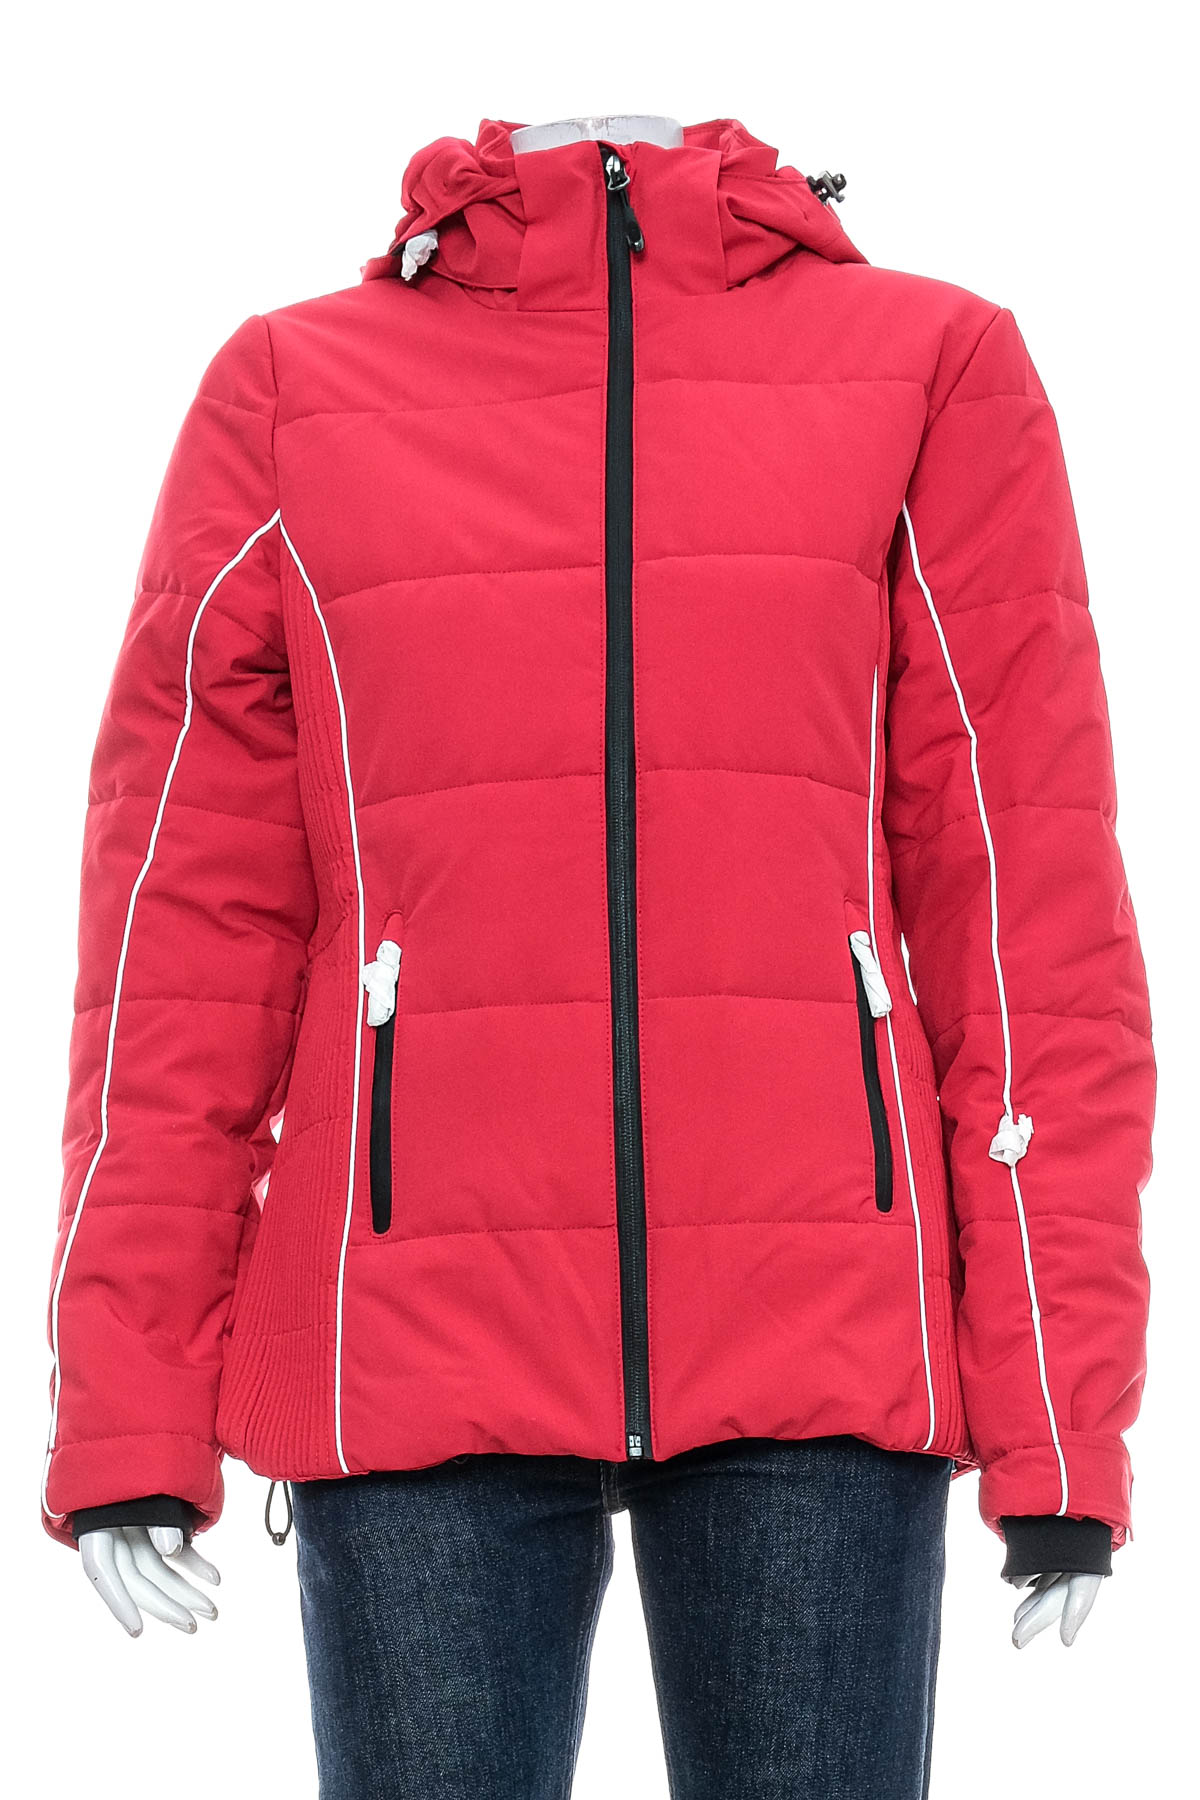 Women's ski jacket - Crane - 0